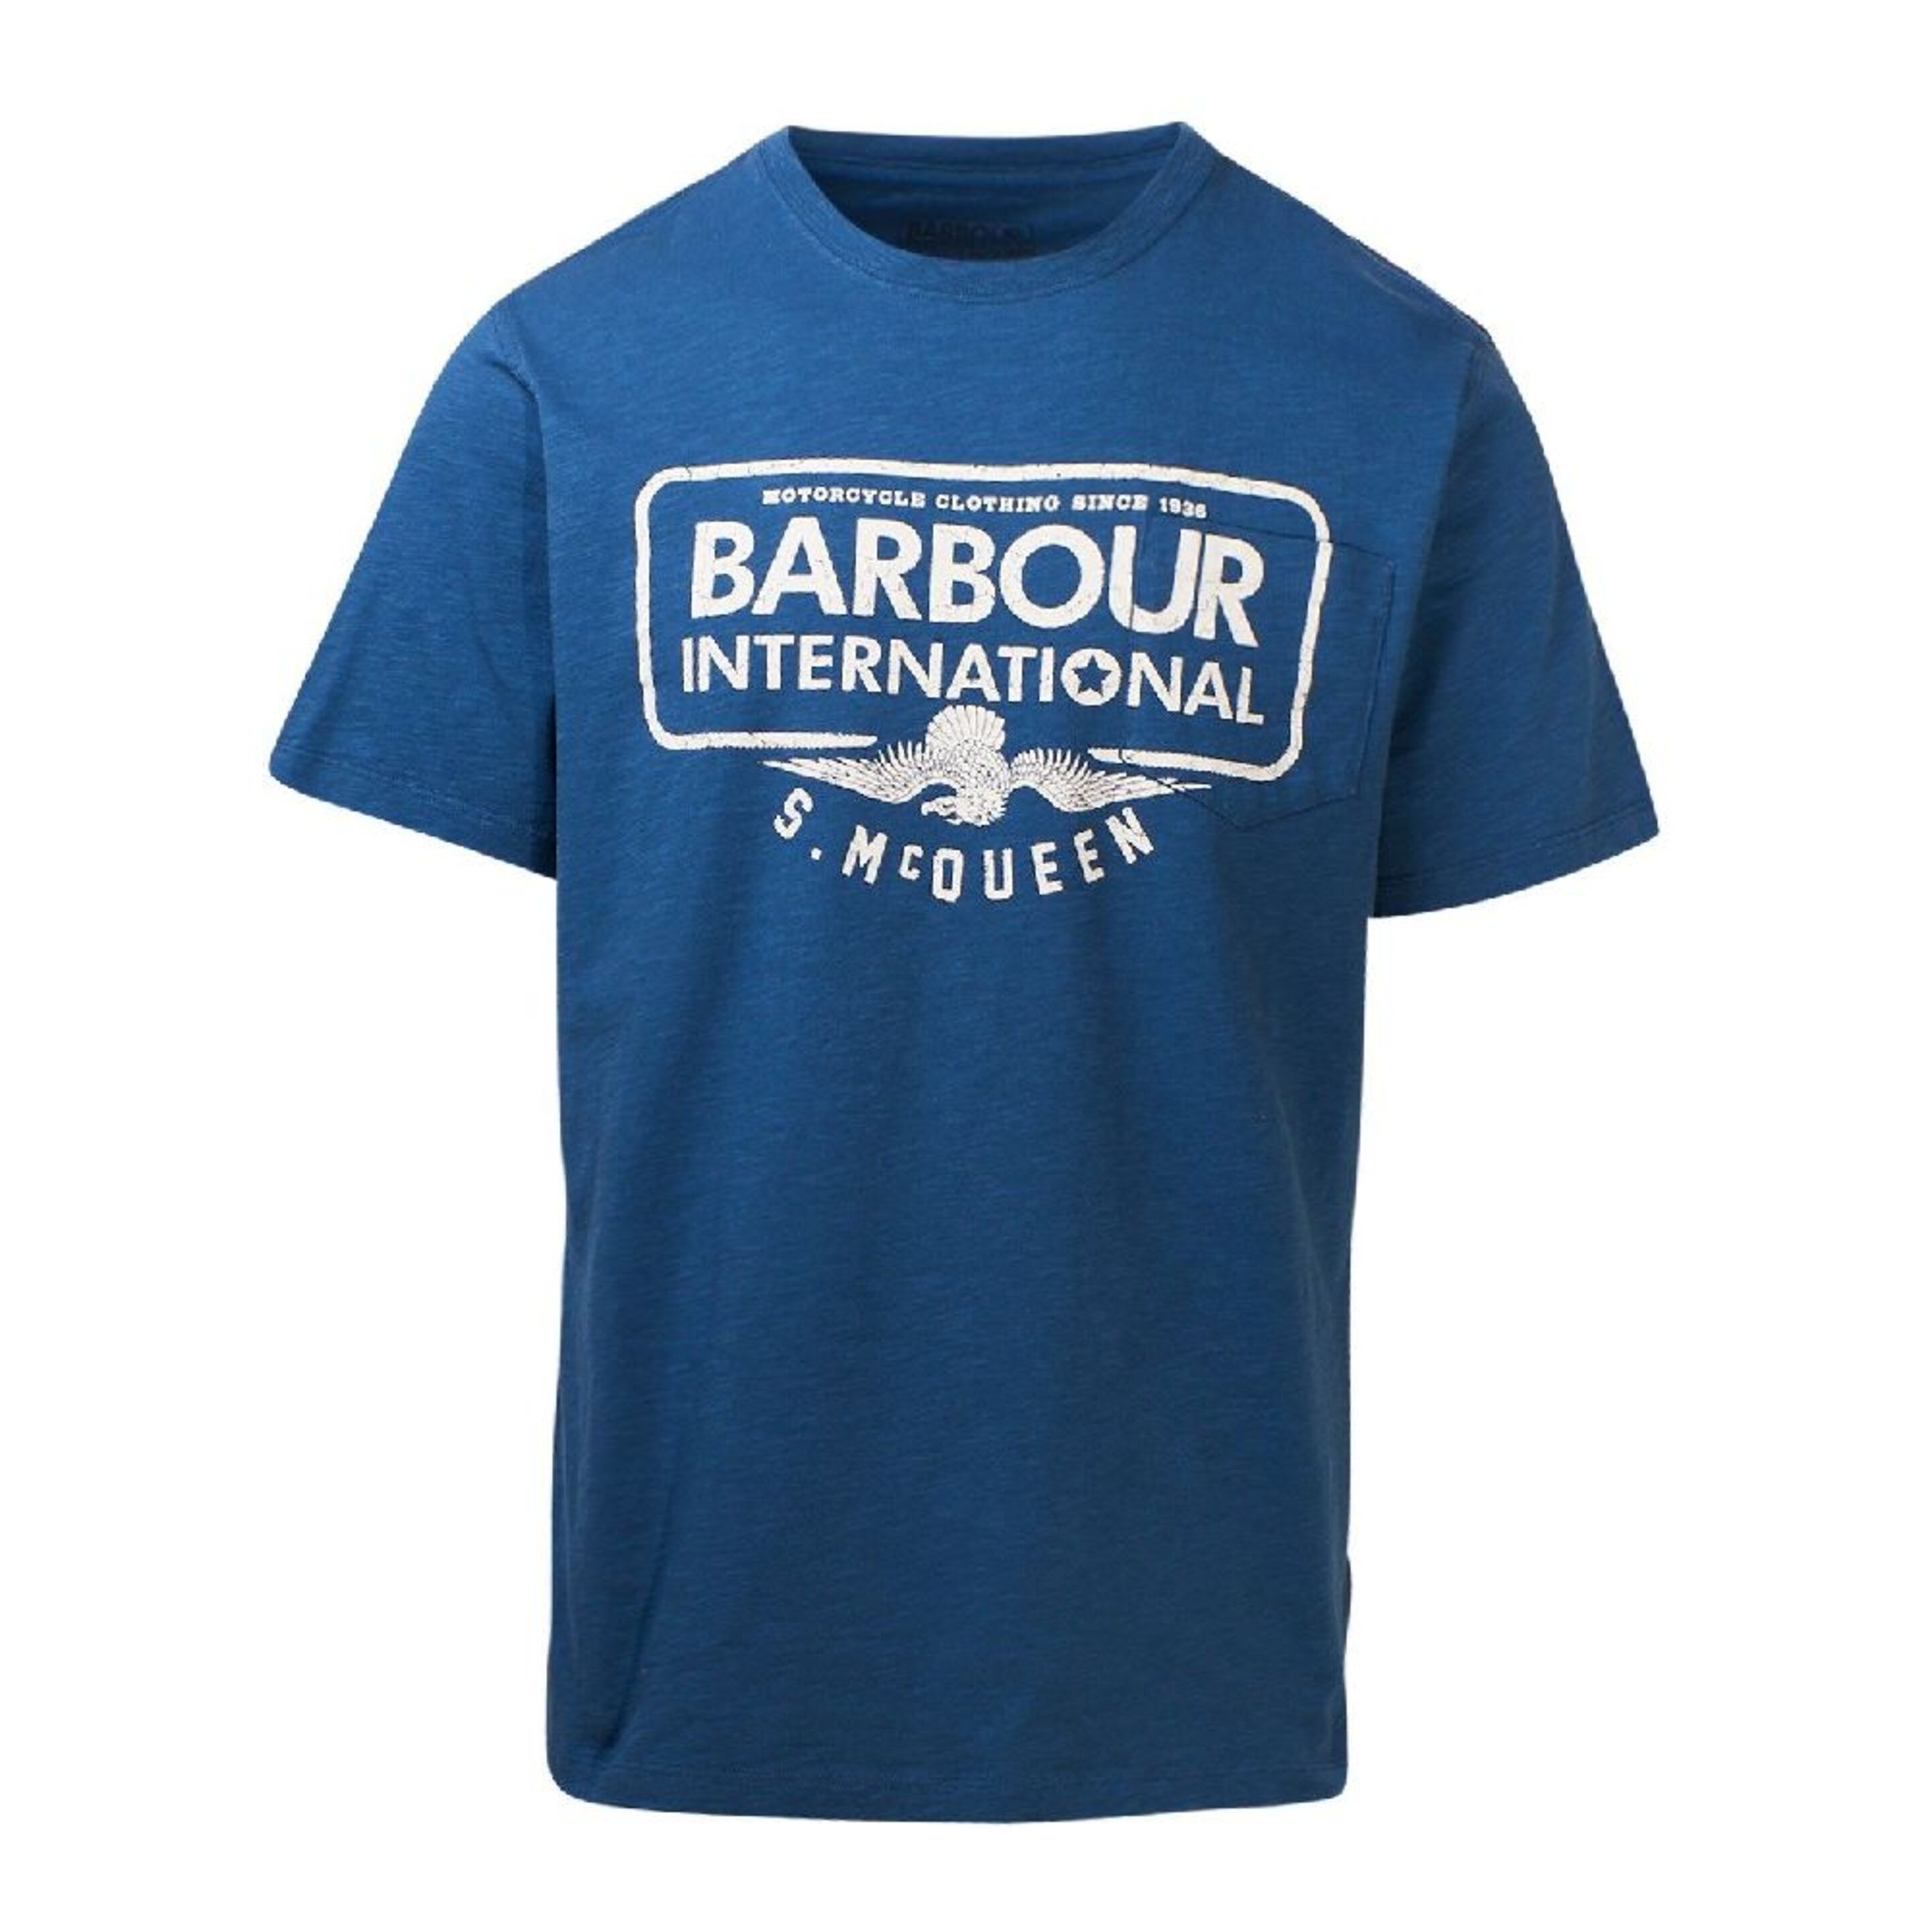 Camiseta Barbour Algodon Batee0397mtsbl55